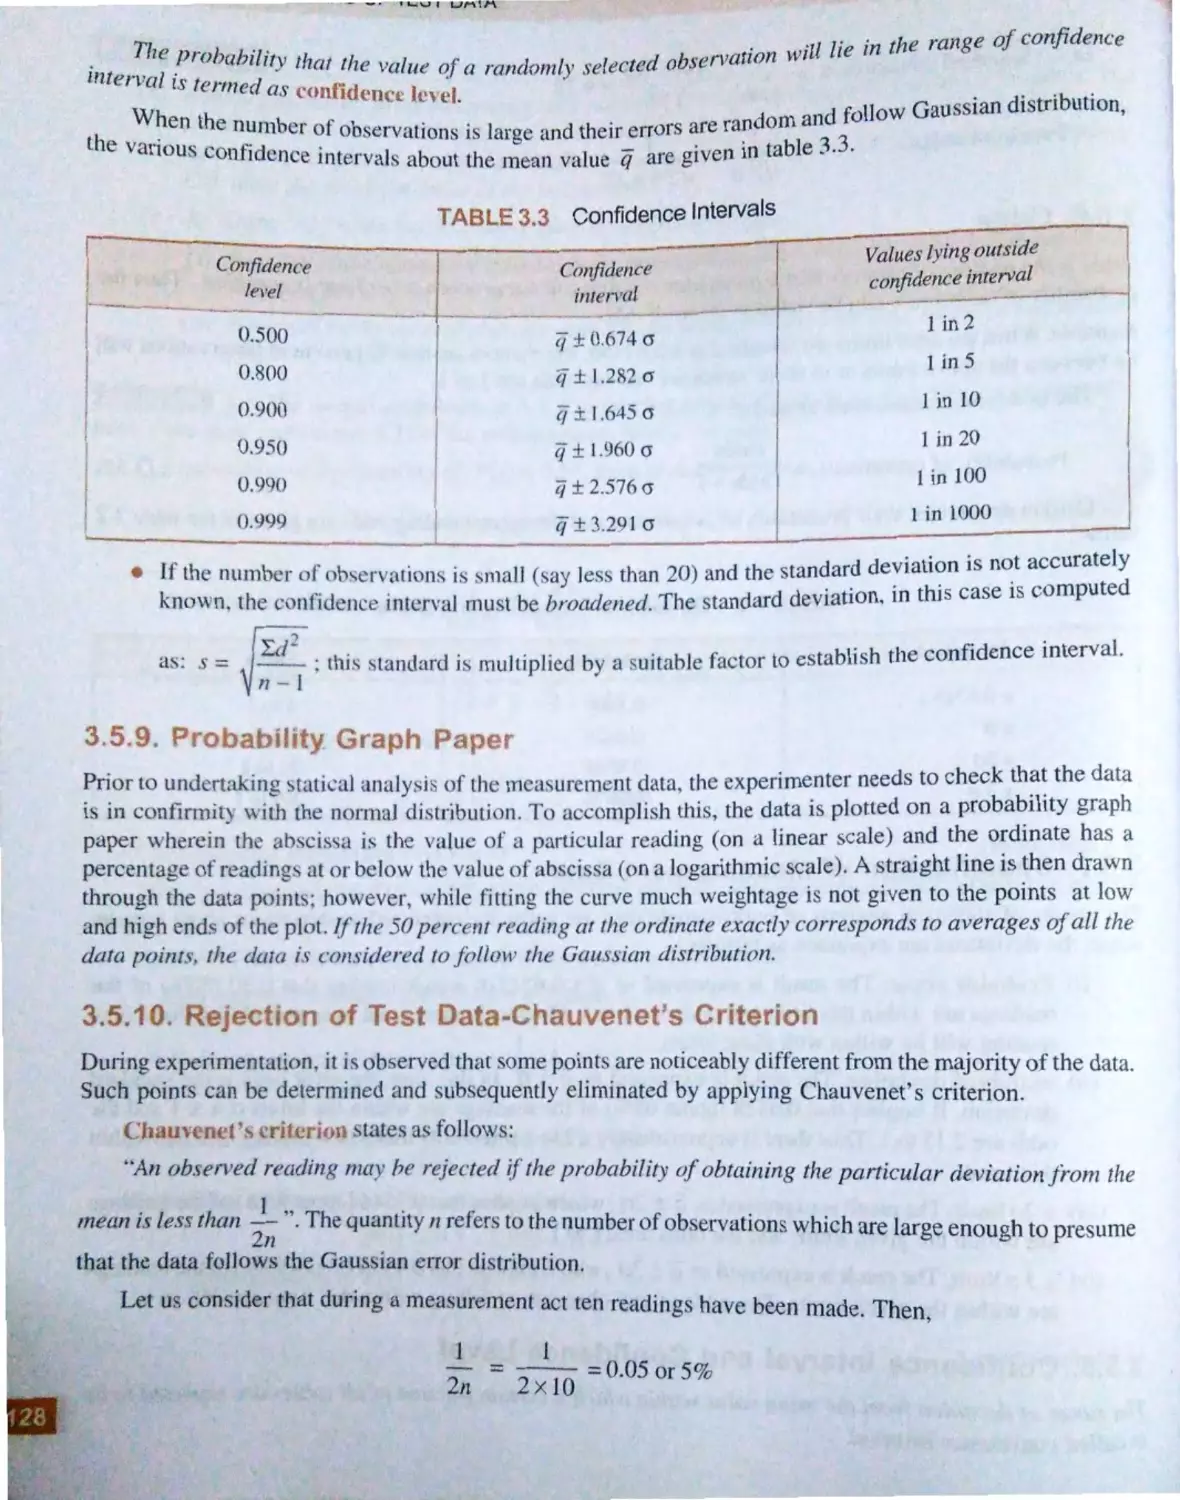 3.5.9. Probability Graph Paper
3.5.10. Rejection of test Data - Chauvenet's Criterion